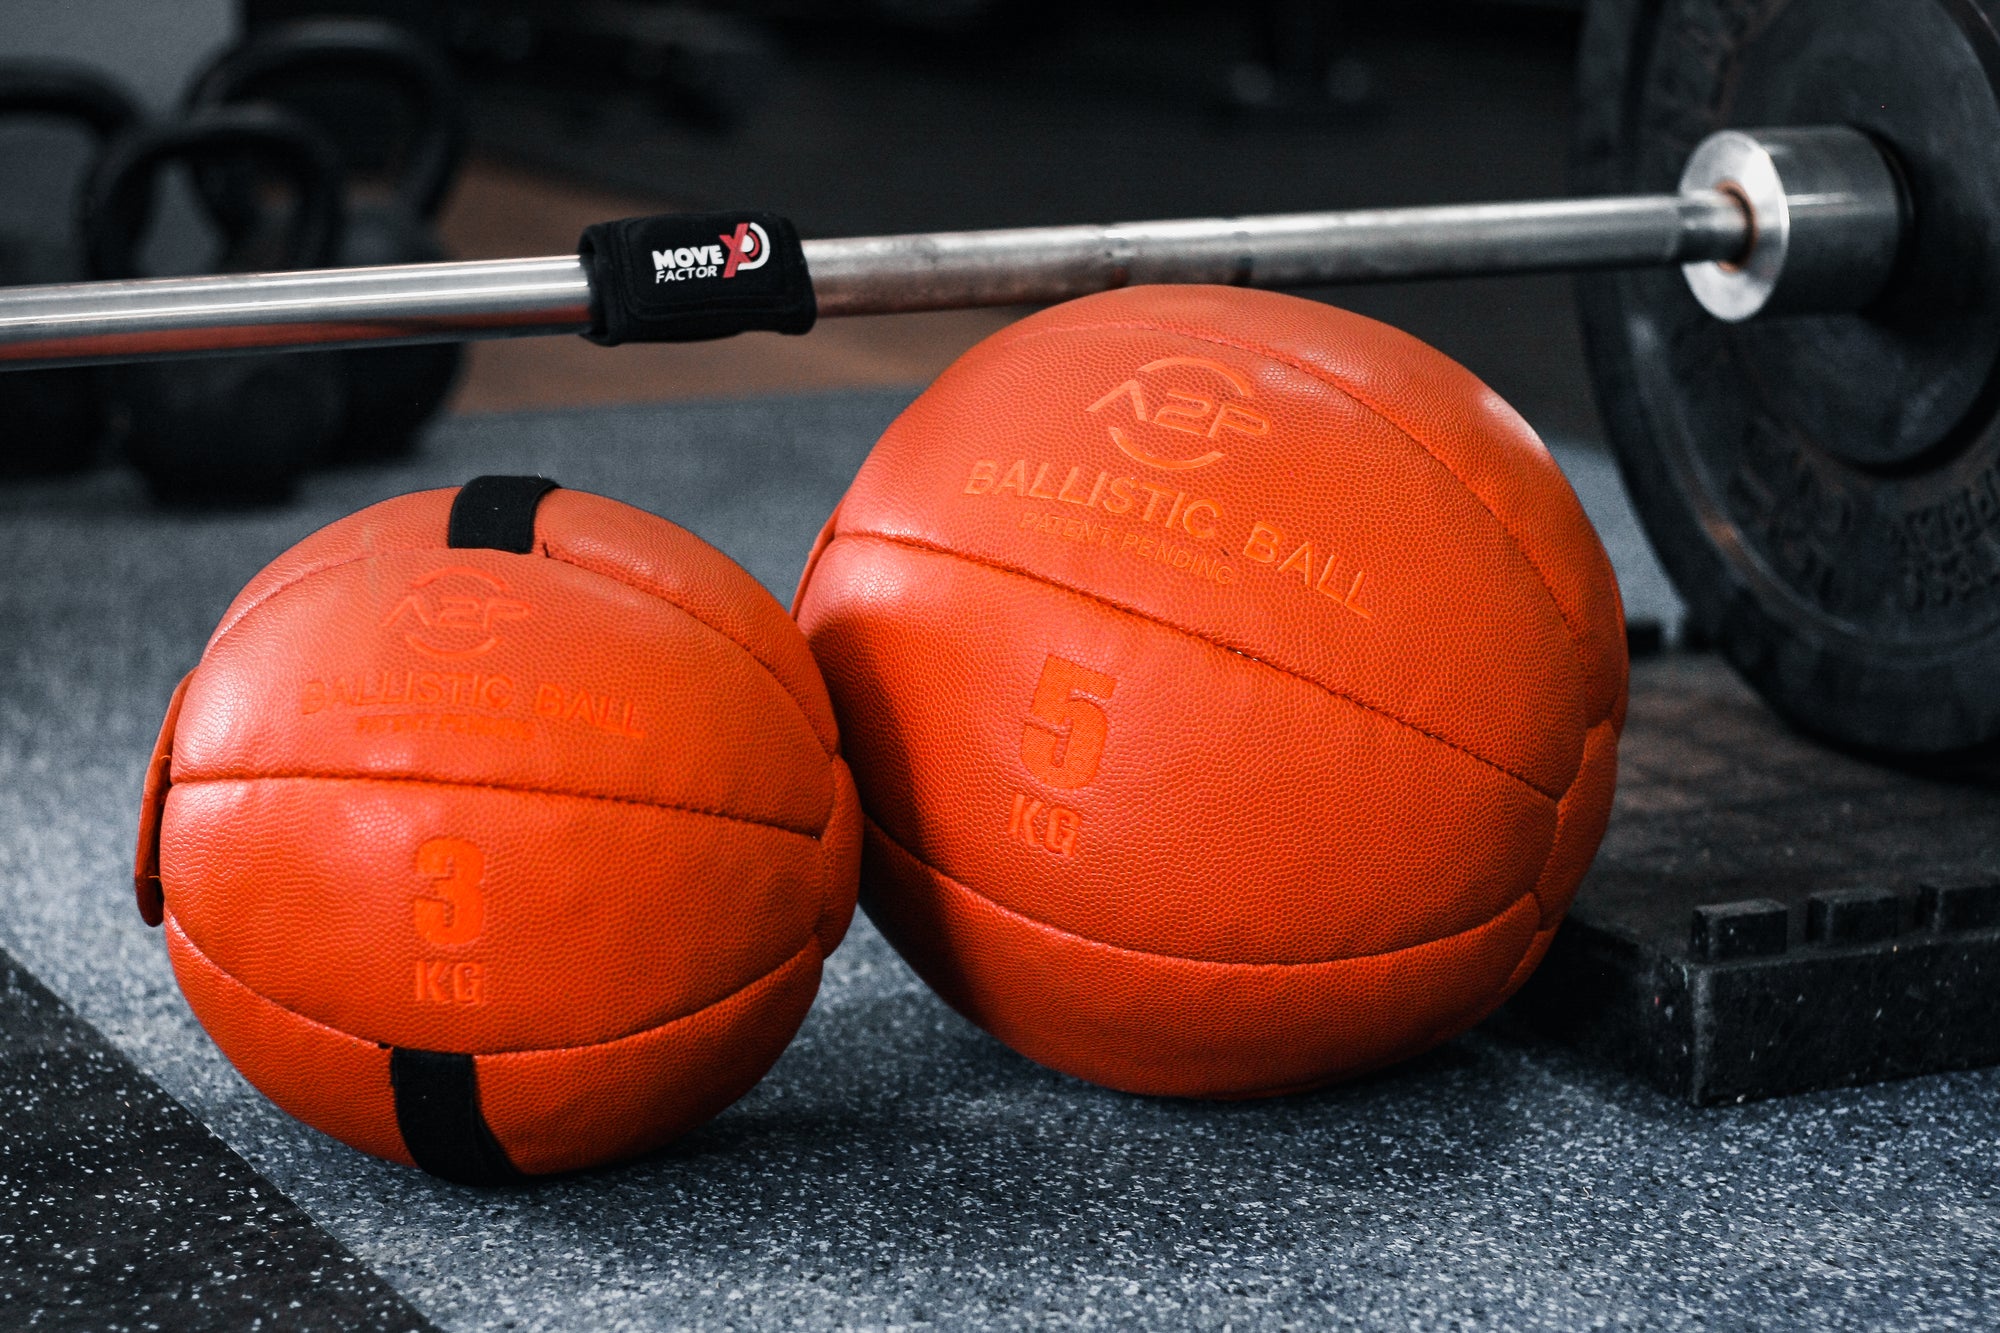 velocity based training ballistic ball 